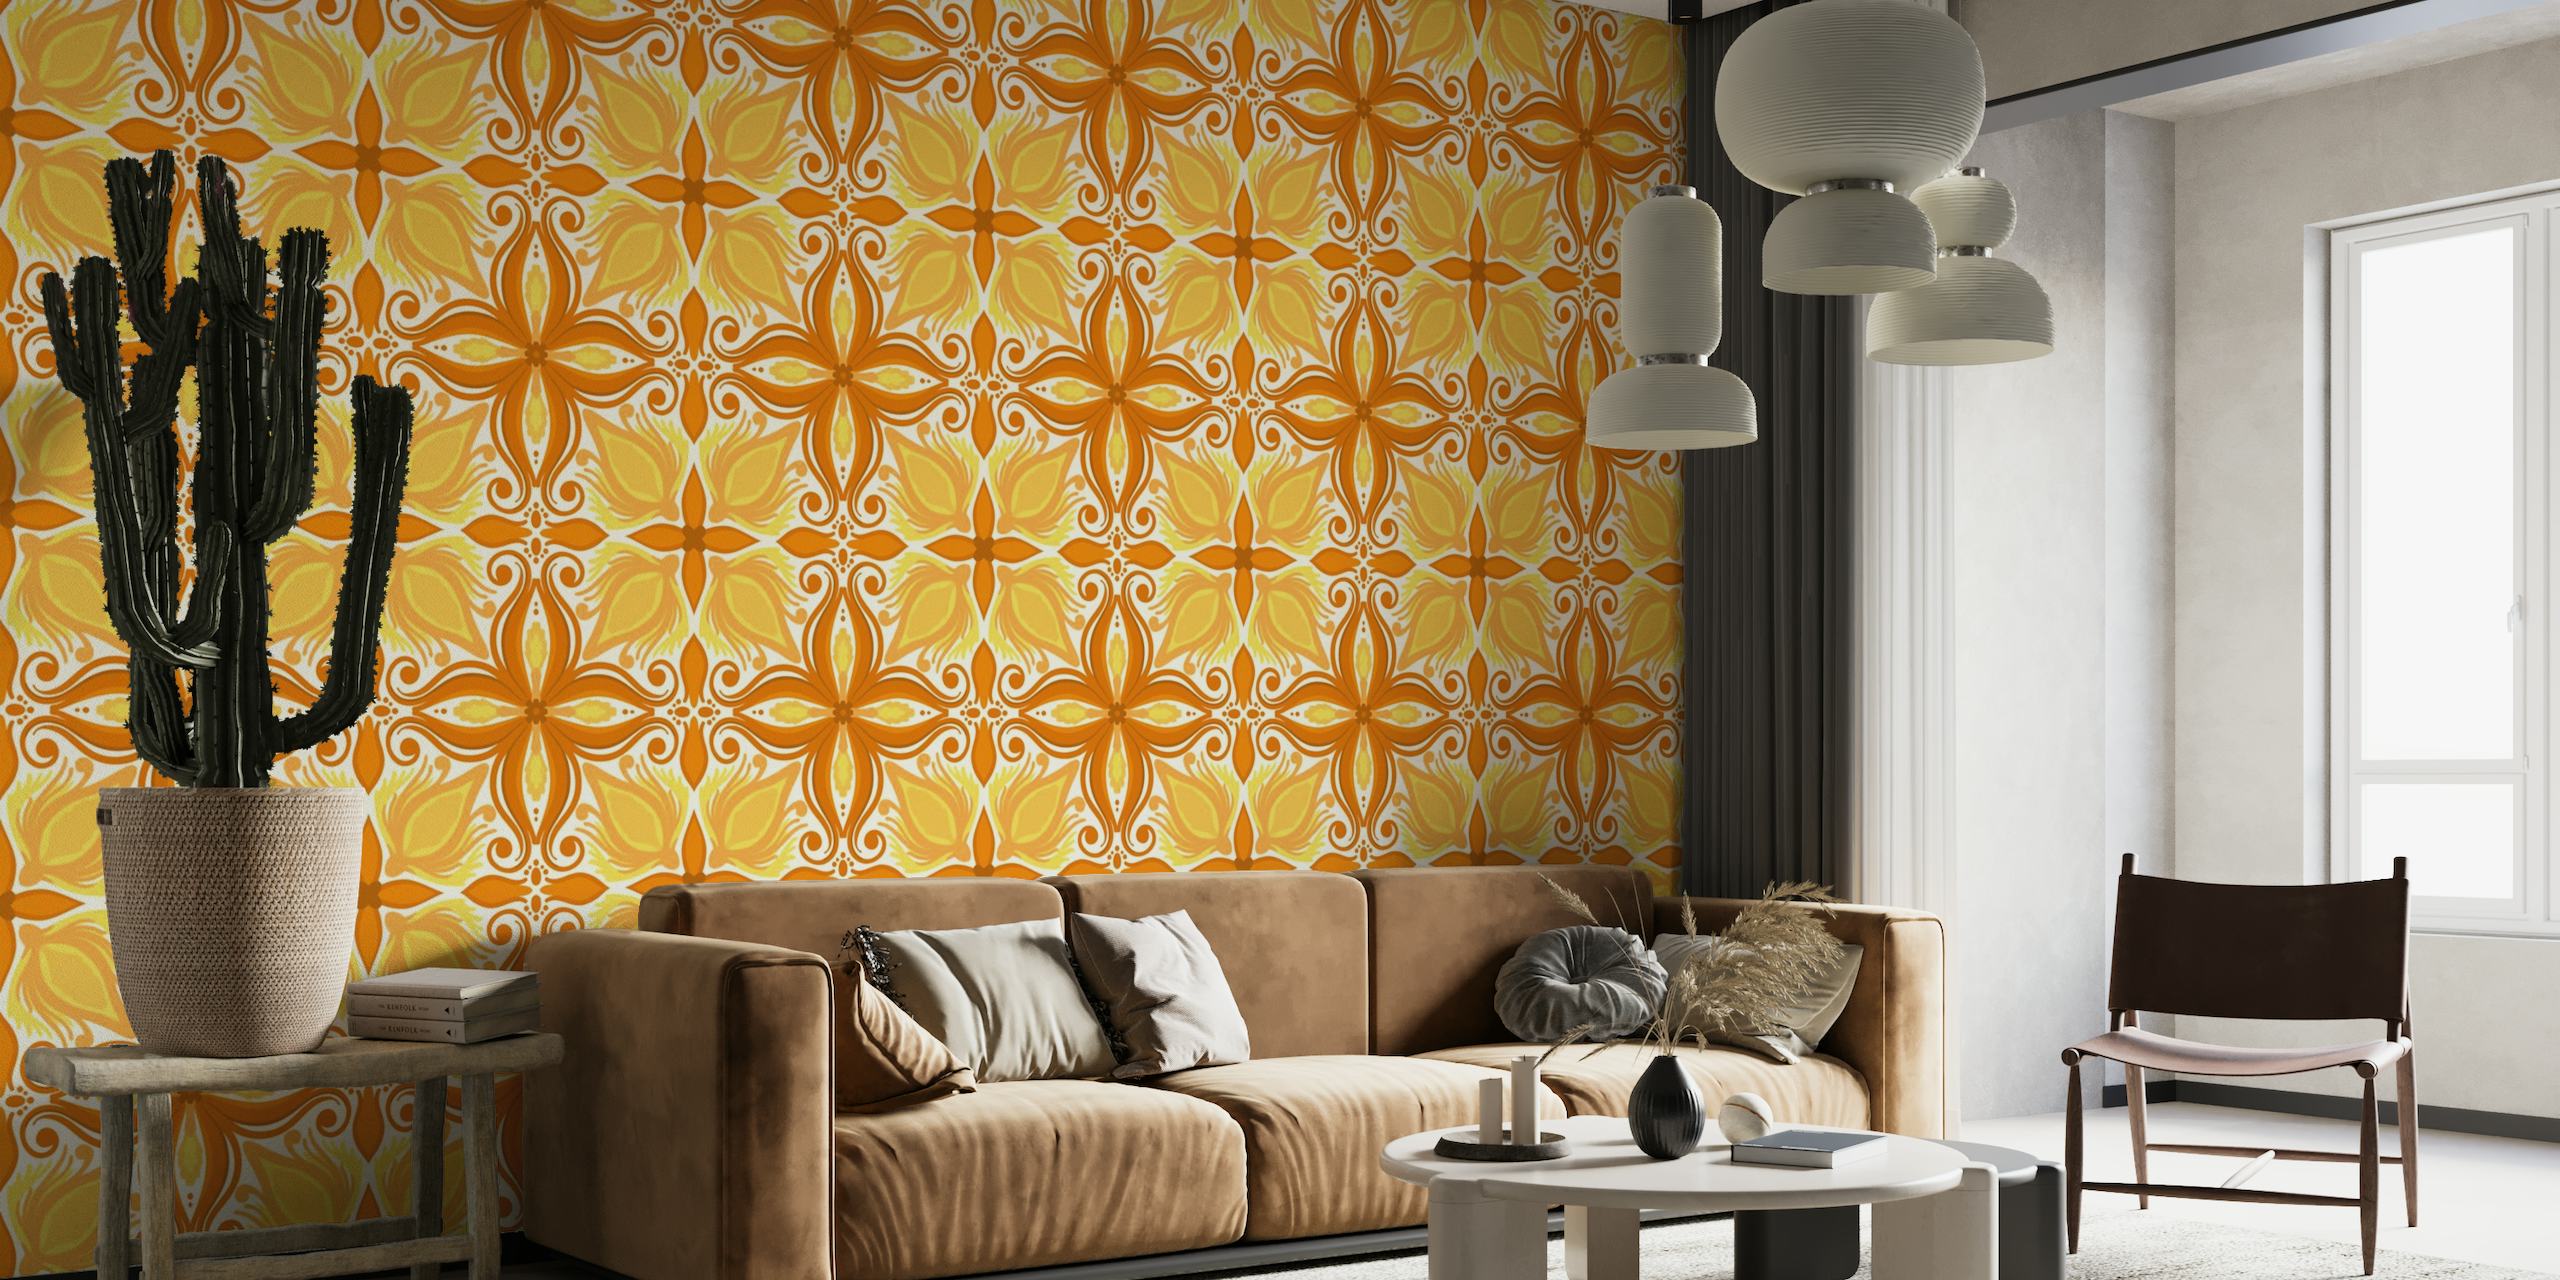 Ornate tiles, yellow and orange 8 papiers peint